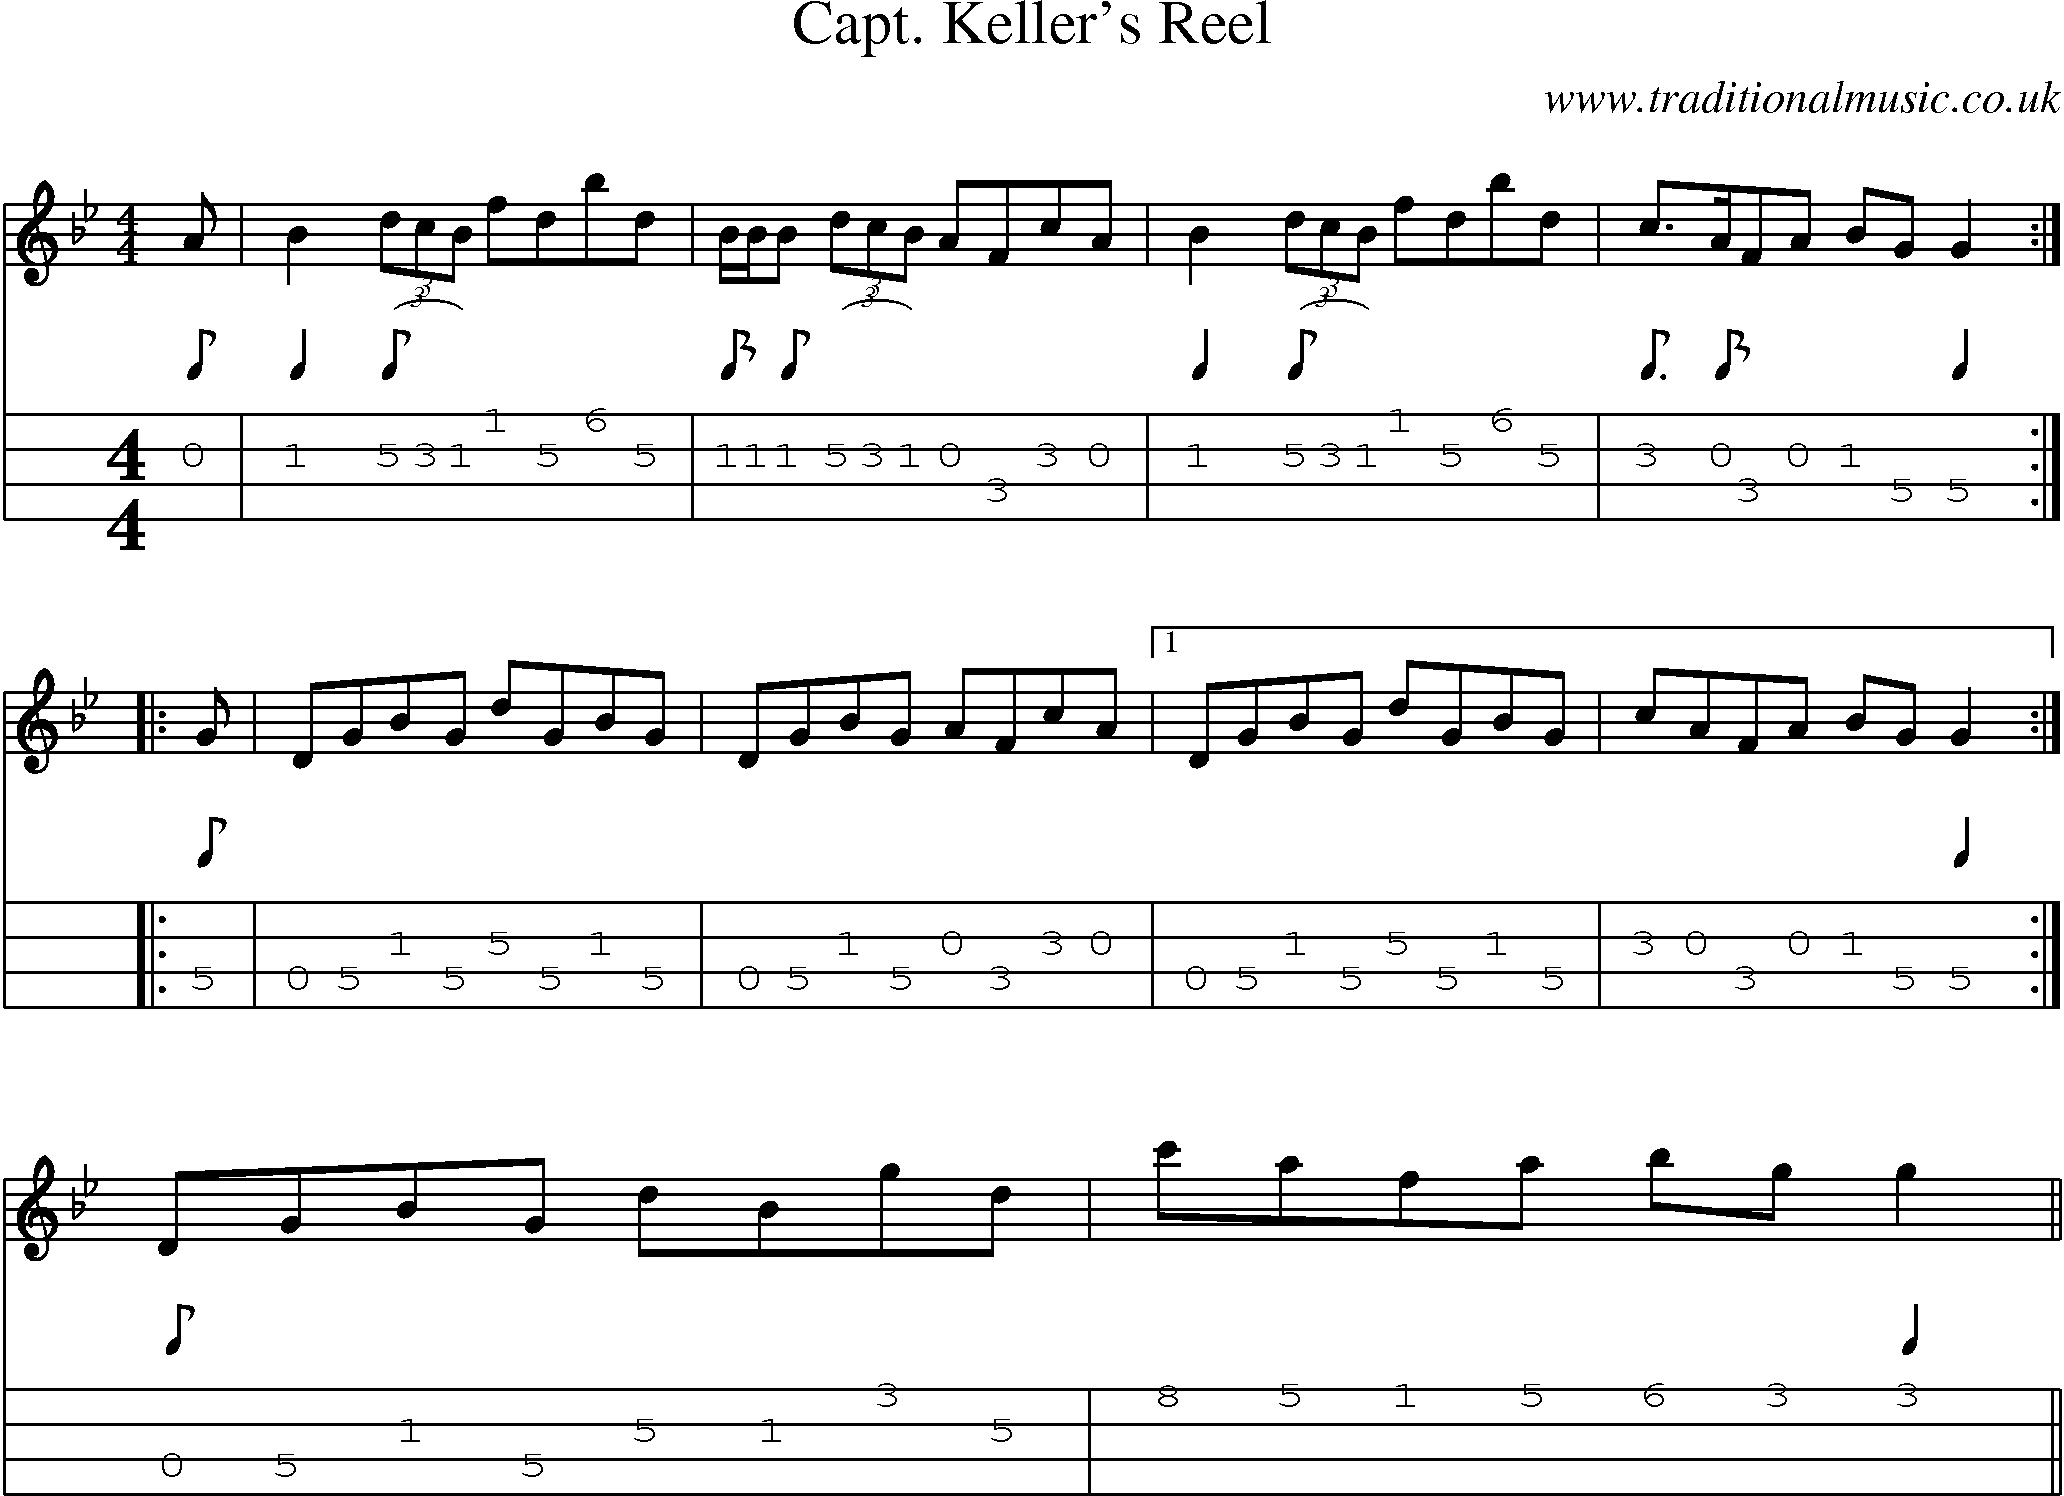 Music Score and Mandolin Tabs for Capt Kellers Reel